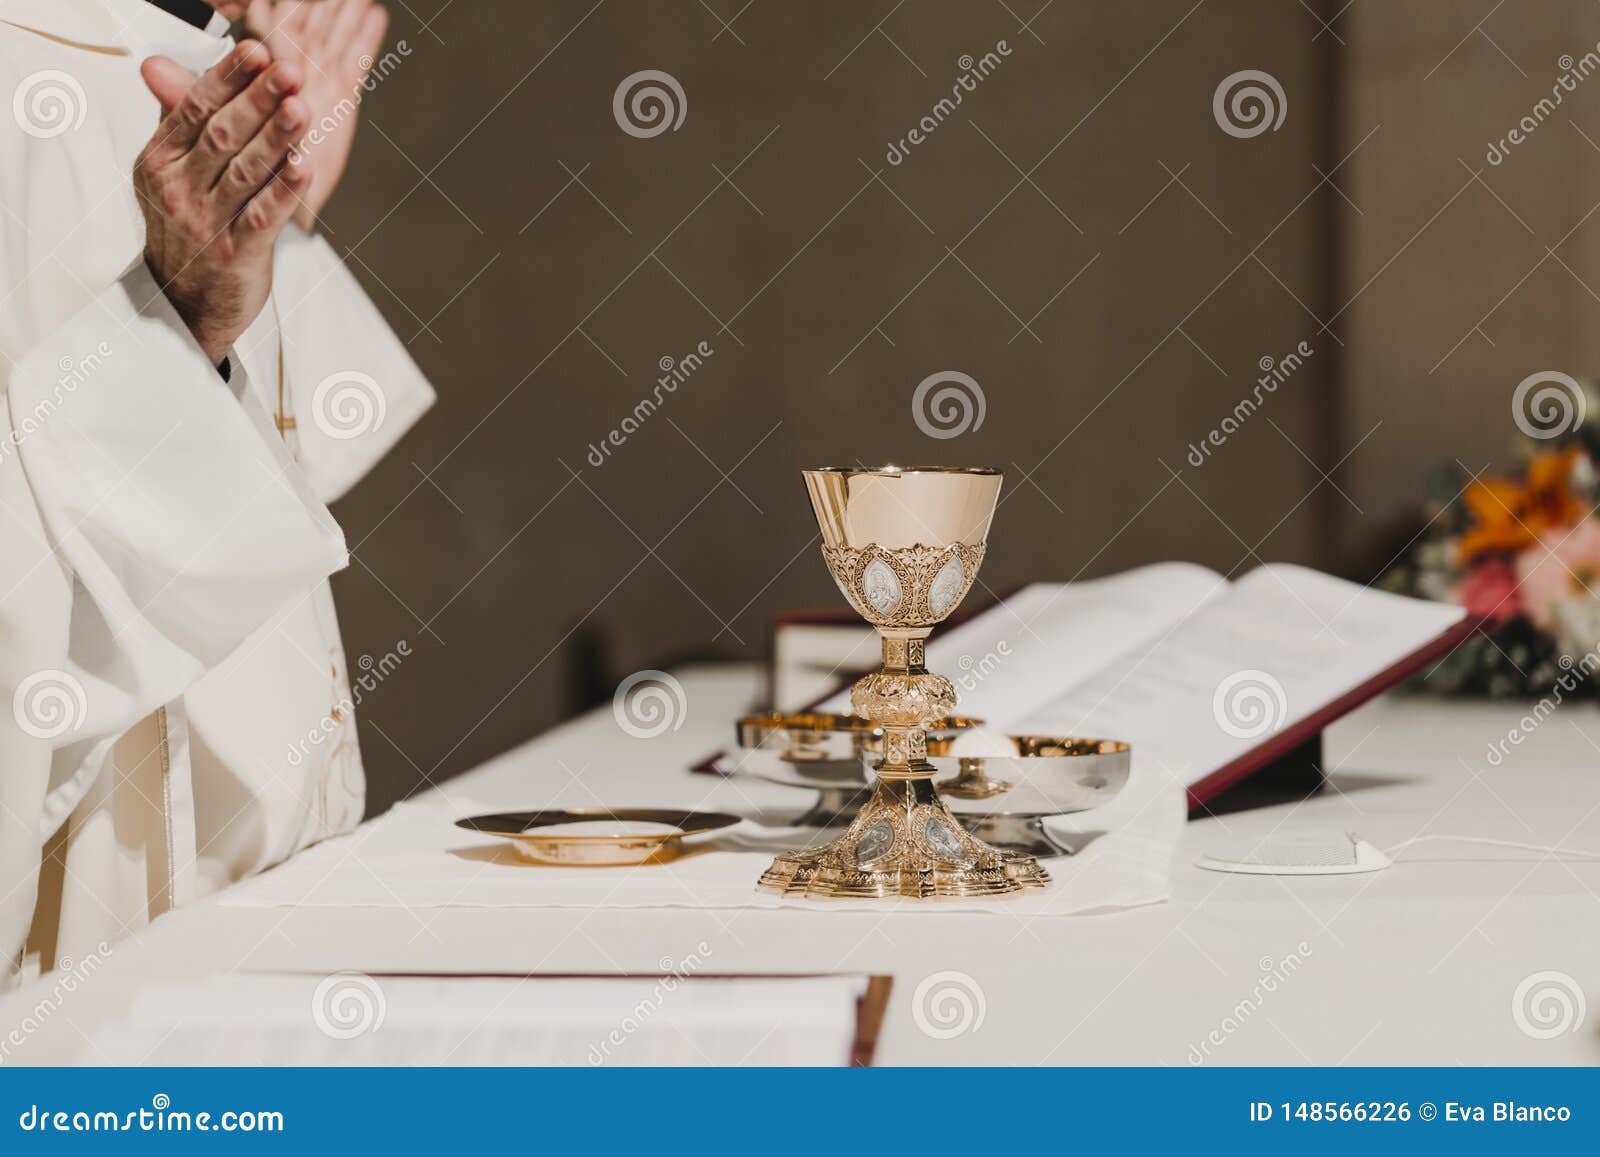 unrecognizable priest holding goblet wedding ceremony nuptial mass religion concept unrecognizable priest holding 148566226